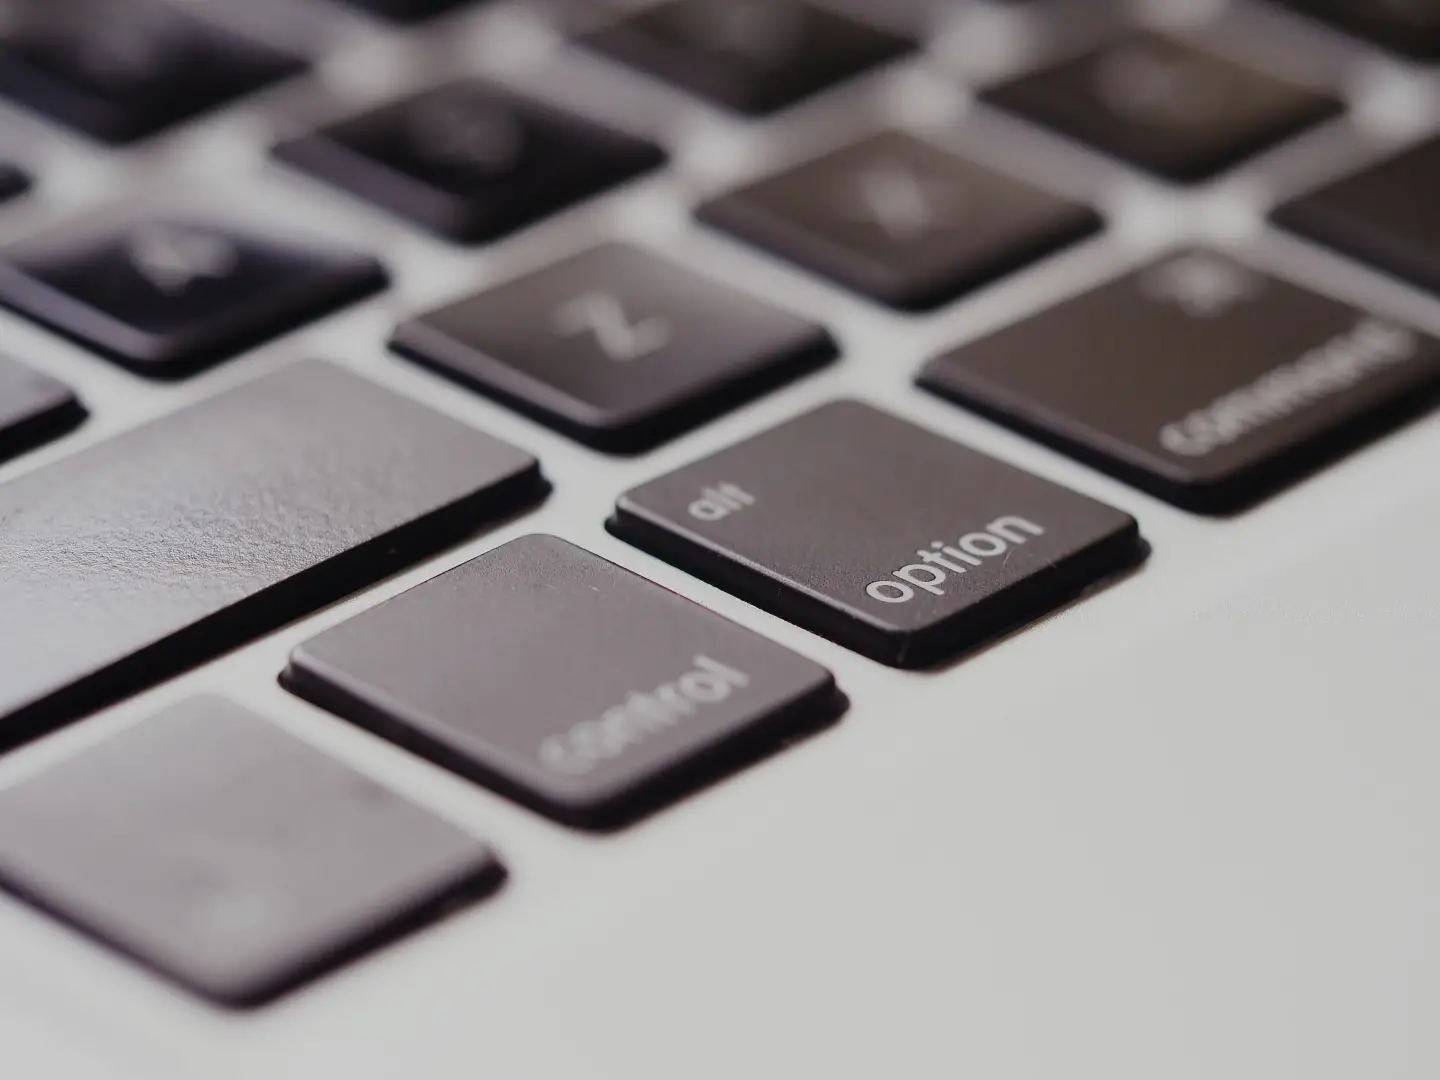 Beginner's guide to using Mac Keyboard Shortcuts